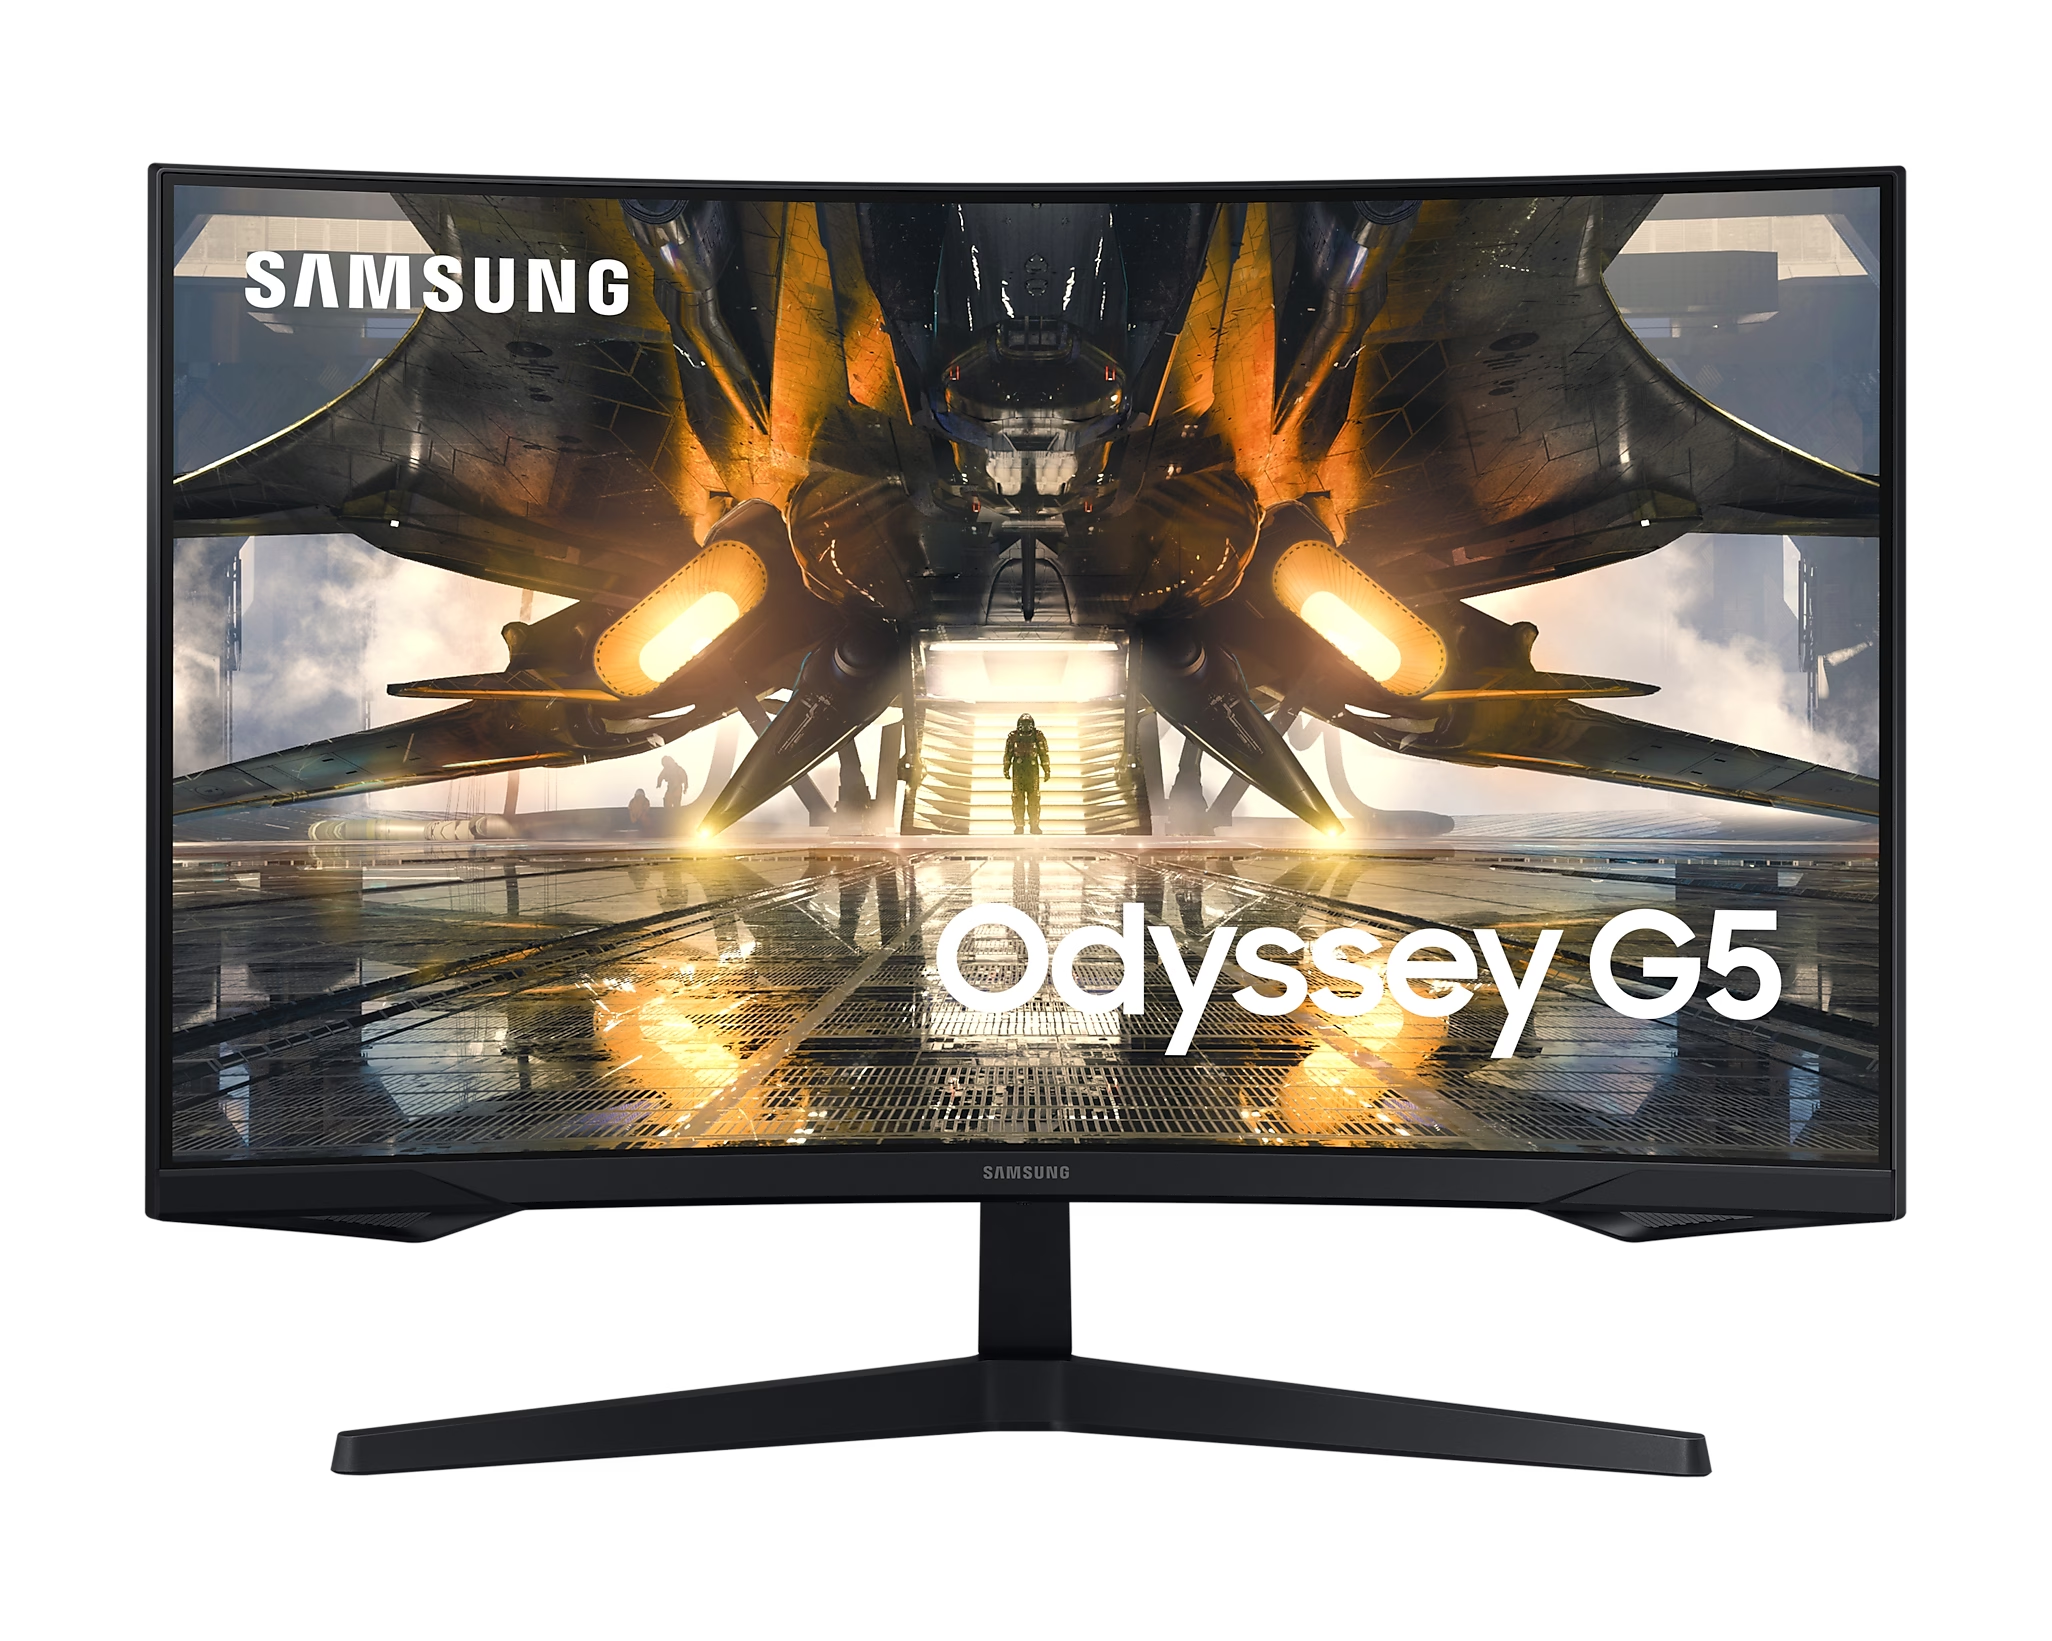 Samsung Odyssey G5 32